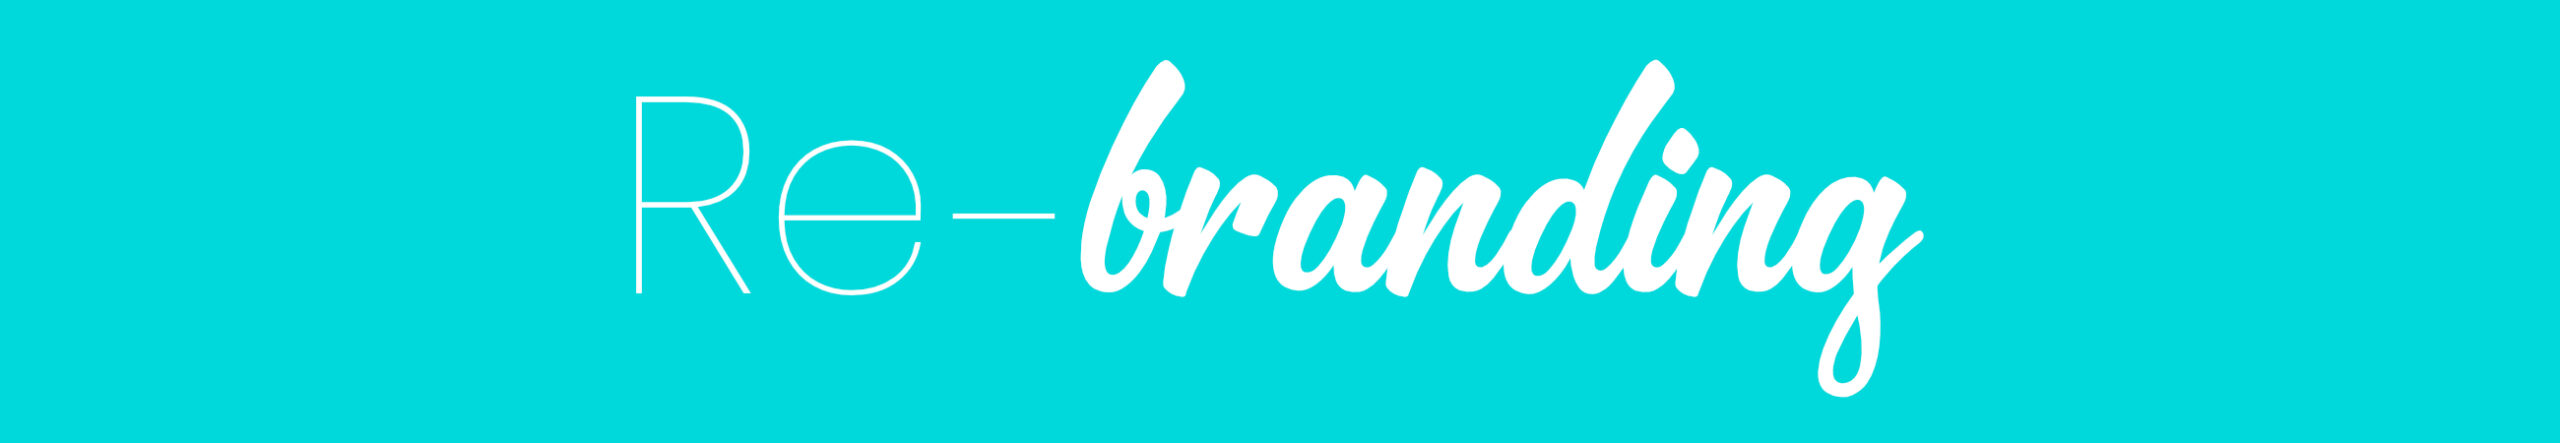 re-branding_header